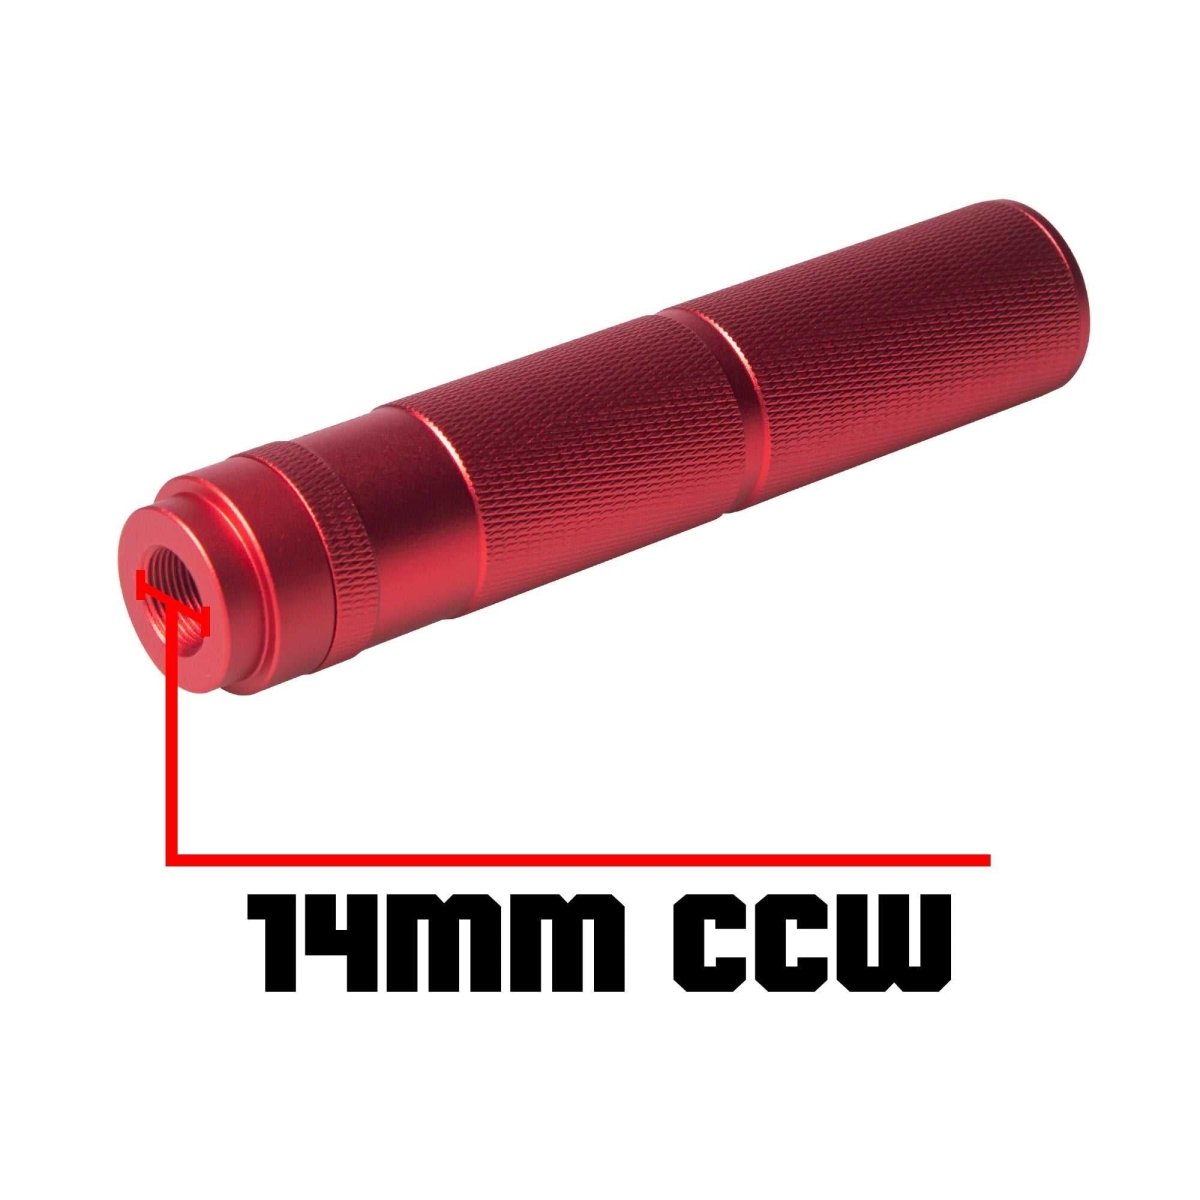 EMERBU Metal KSC Silencer(Red) - 14mm CCW - EmerbutoysEmerbutoys